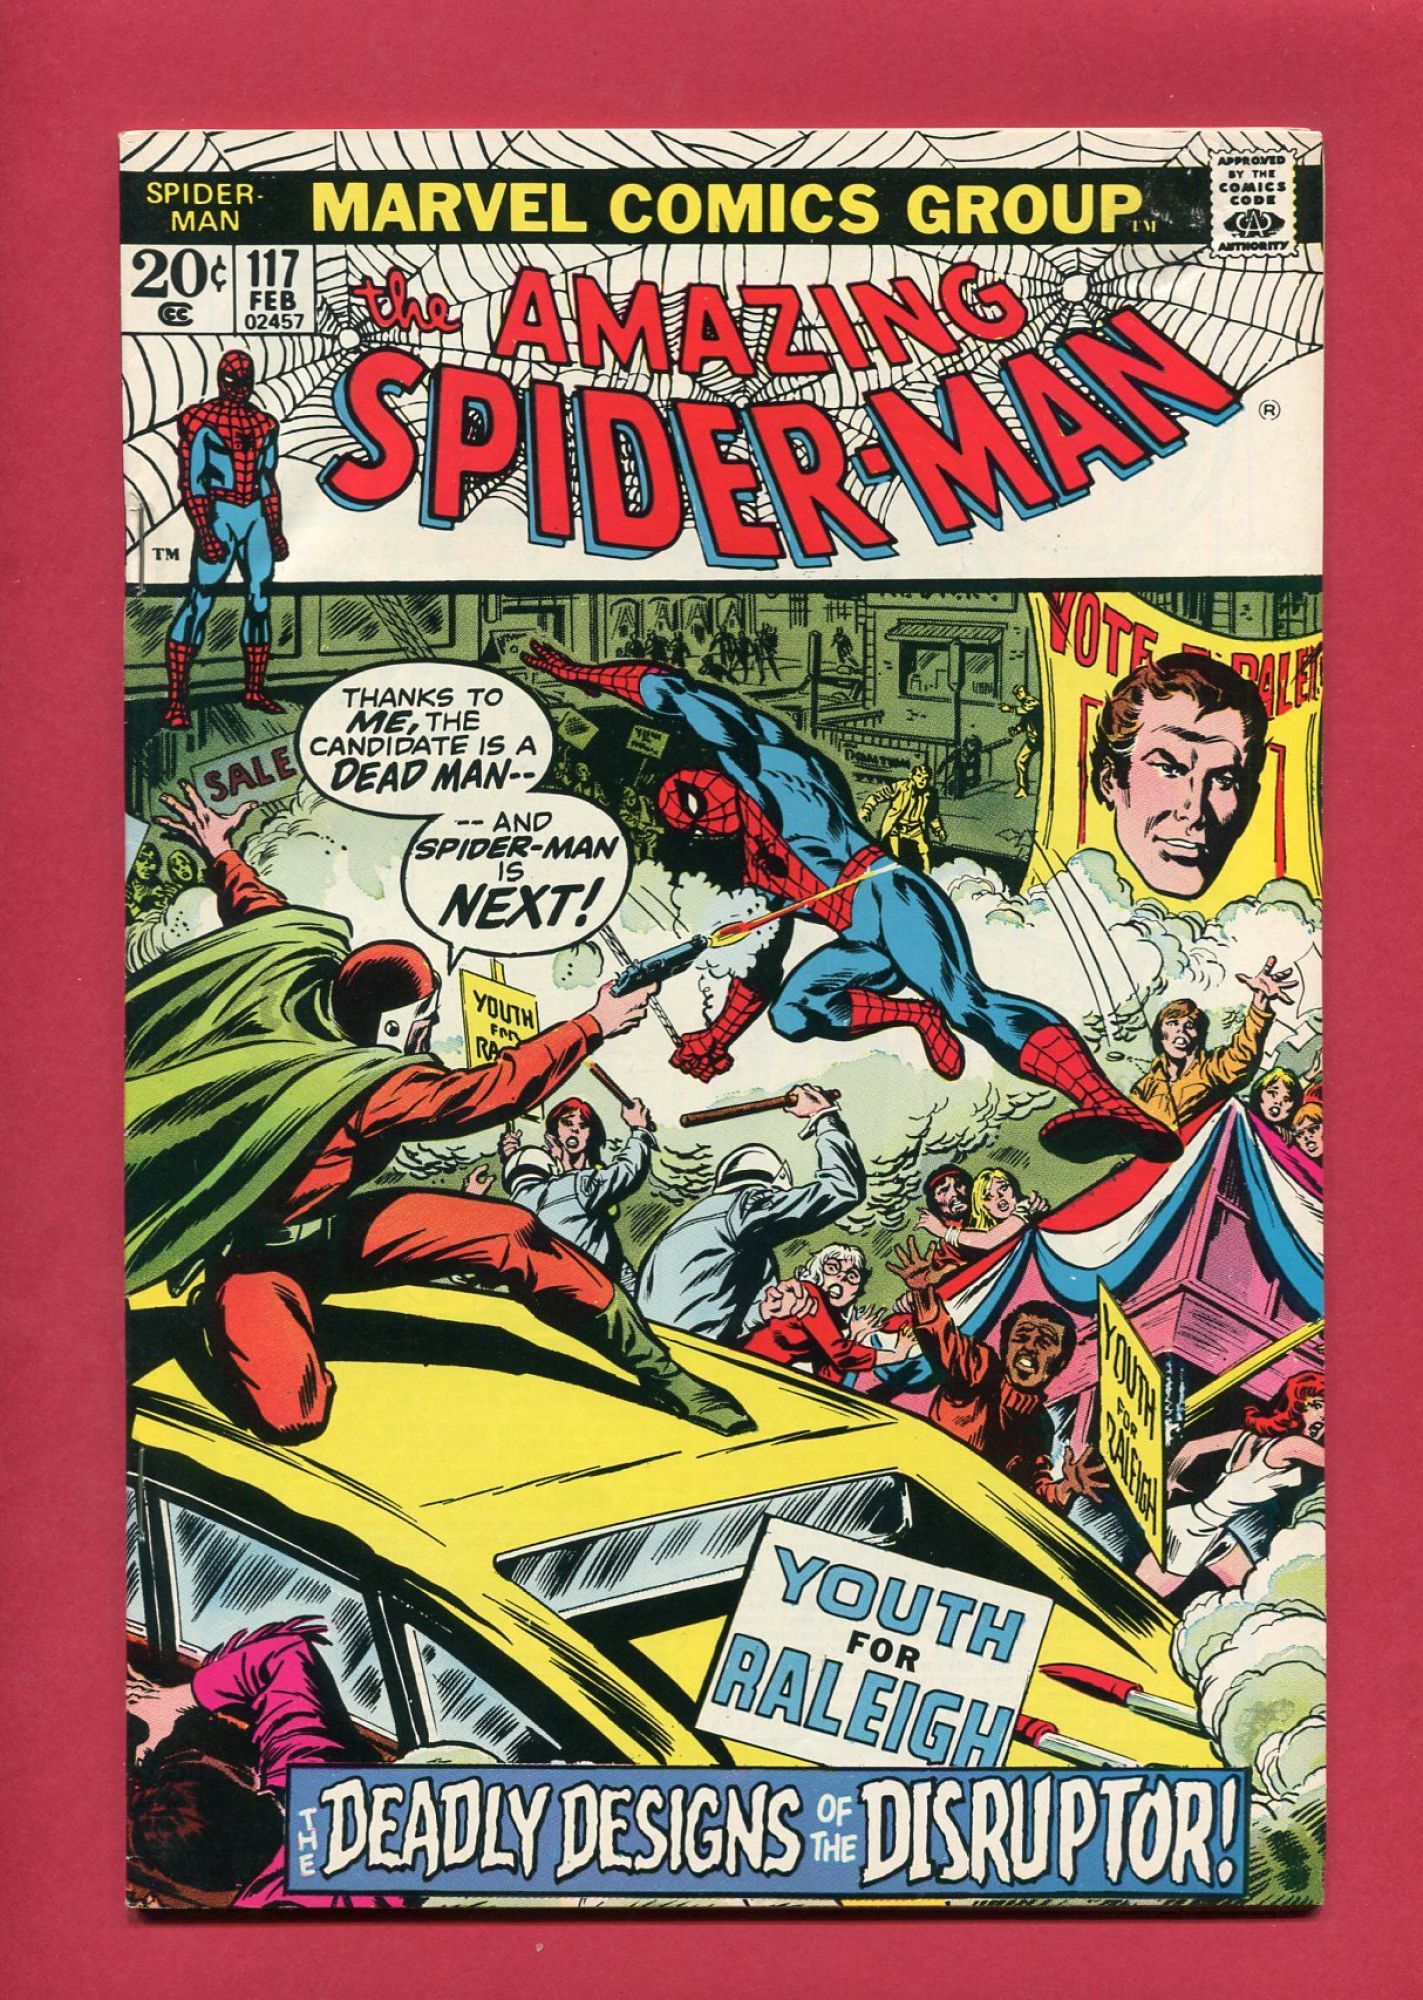 Amazing Spider-Man #117, Feb 1973, 6.5 FN+